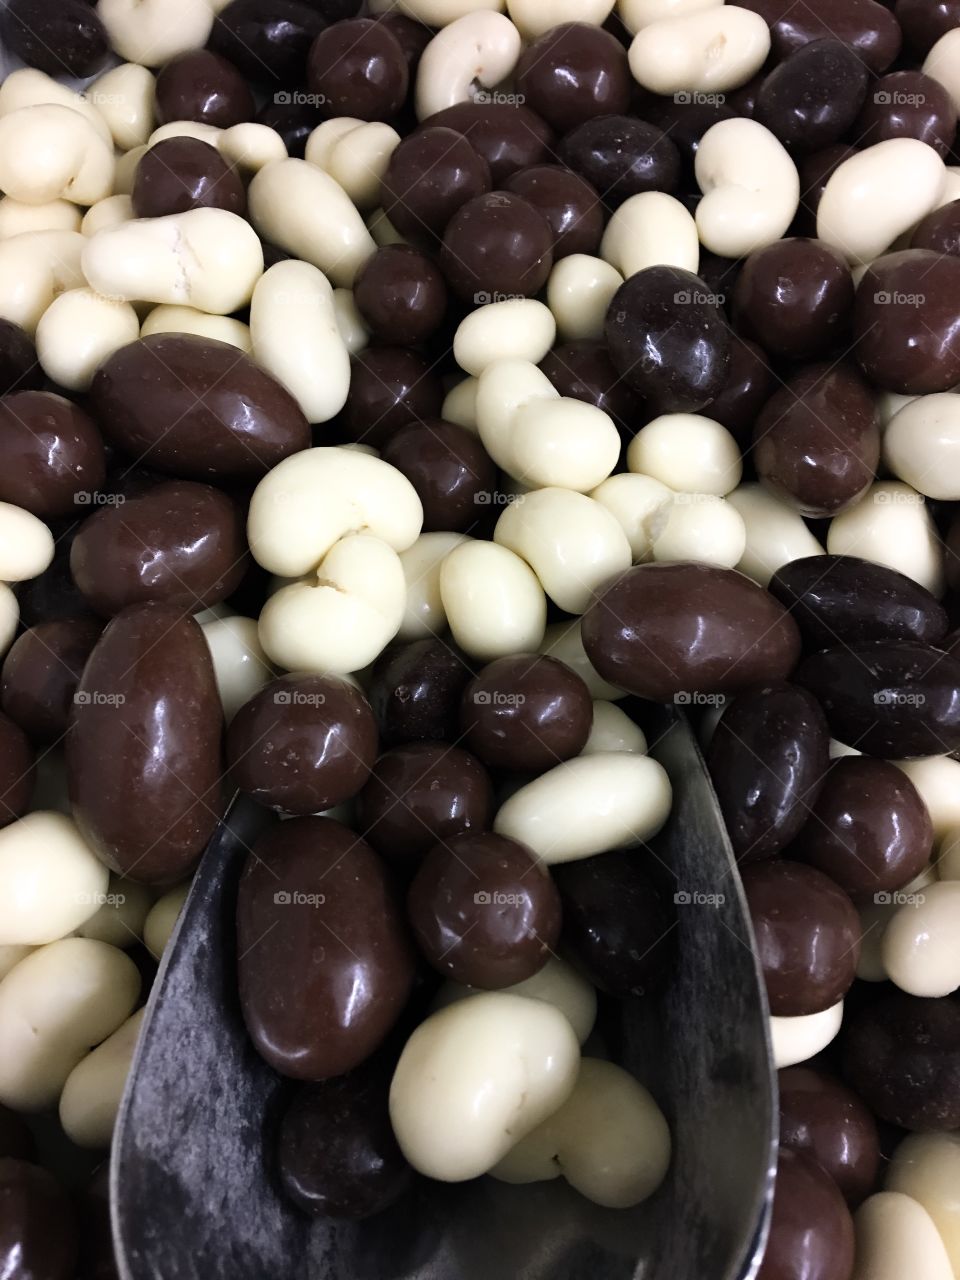 Chocolate coated nuts